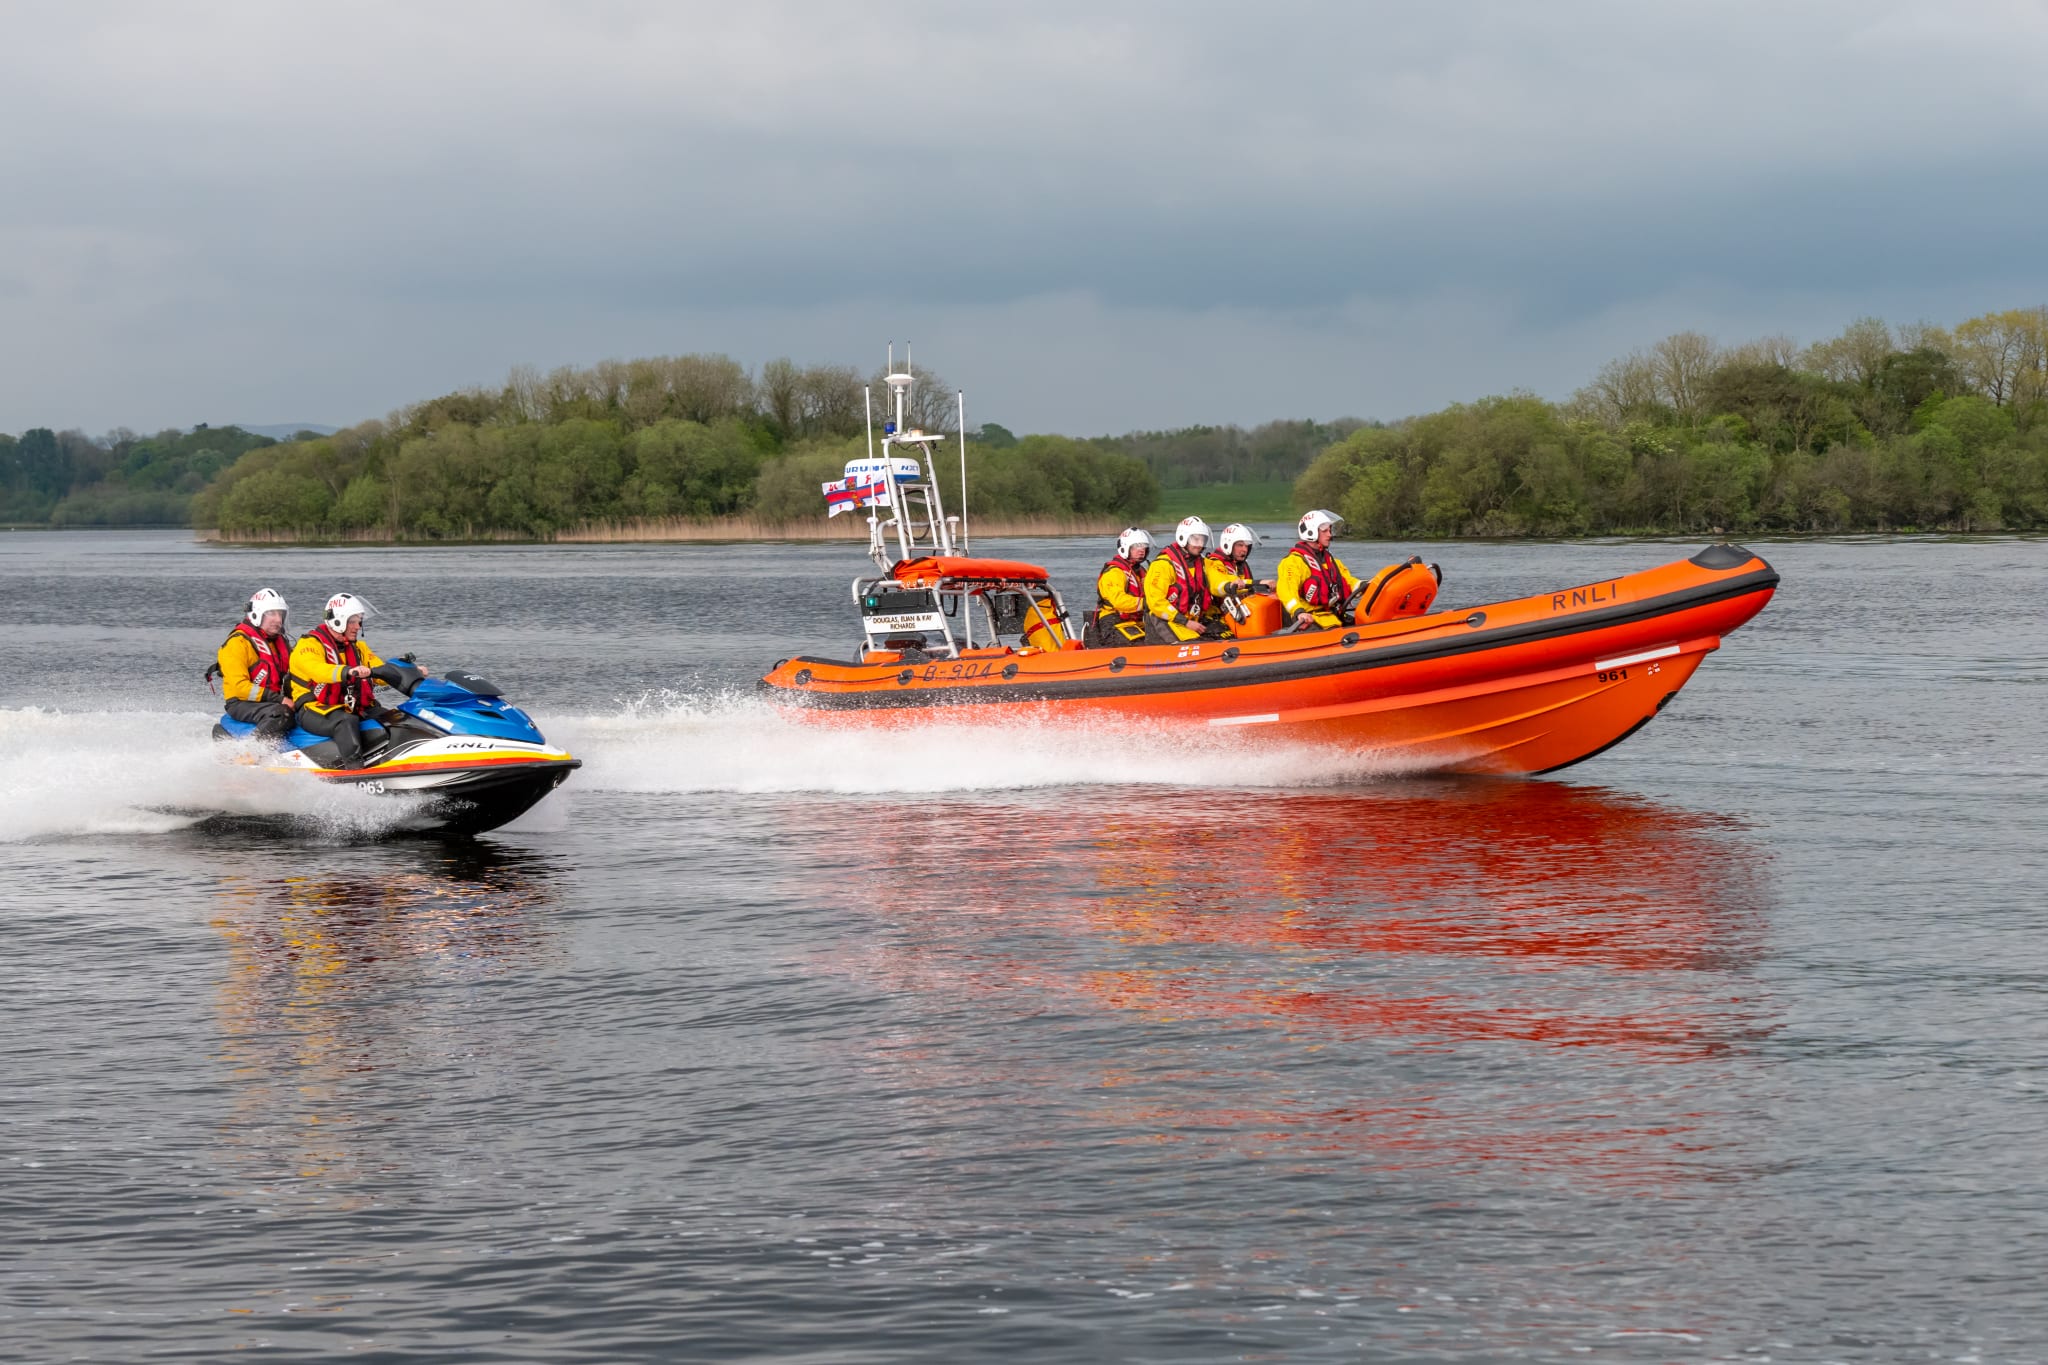 Rnli lifeboats